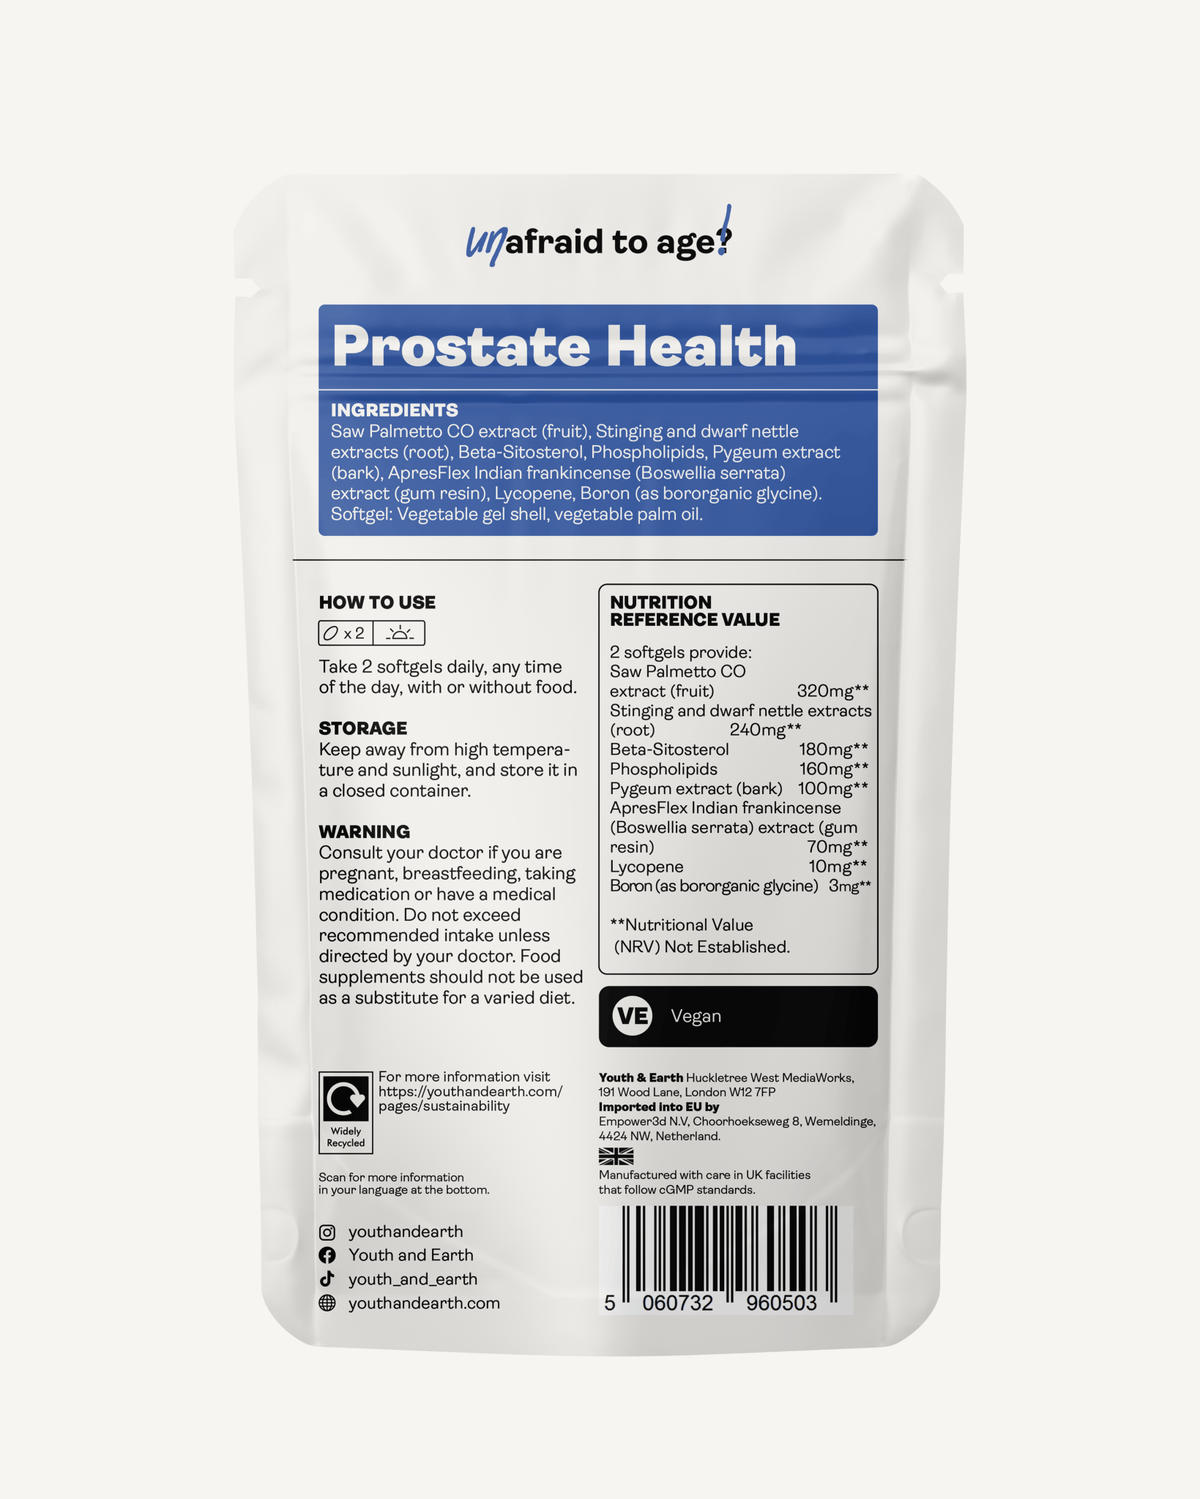 Prostate Health 541mg x 60 Capsules - Youth &amp; Earth EU Store